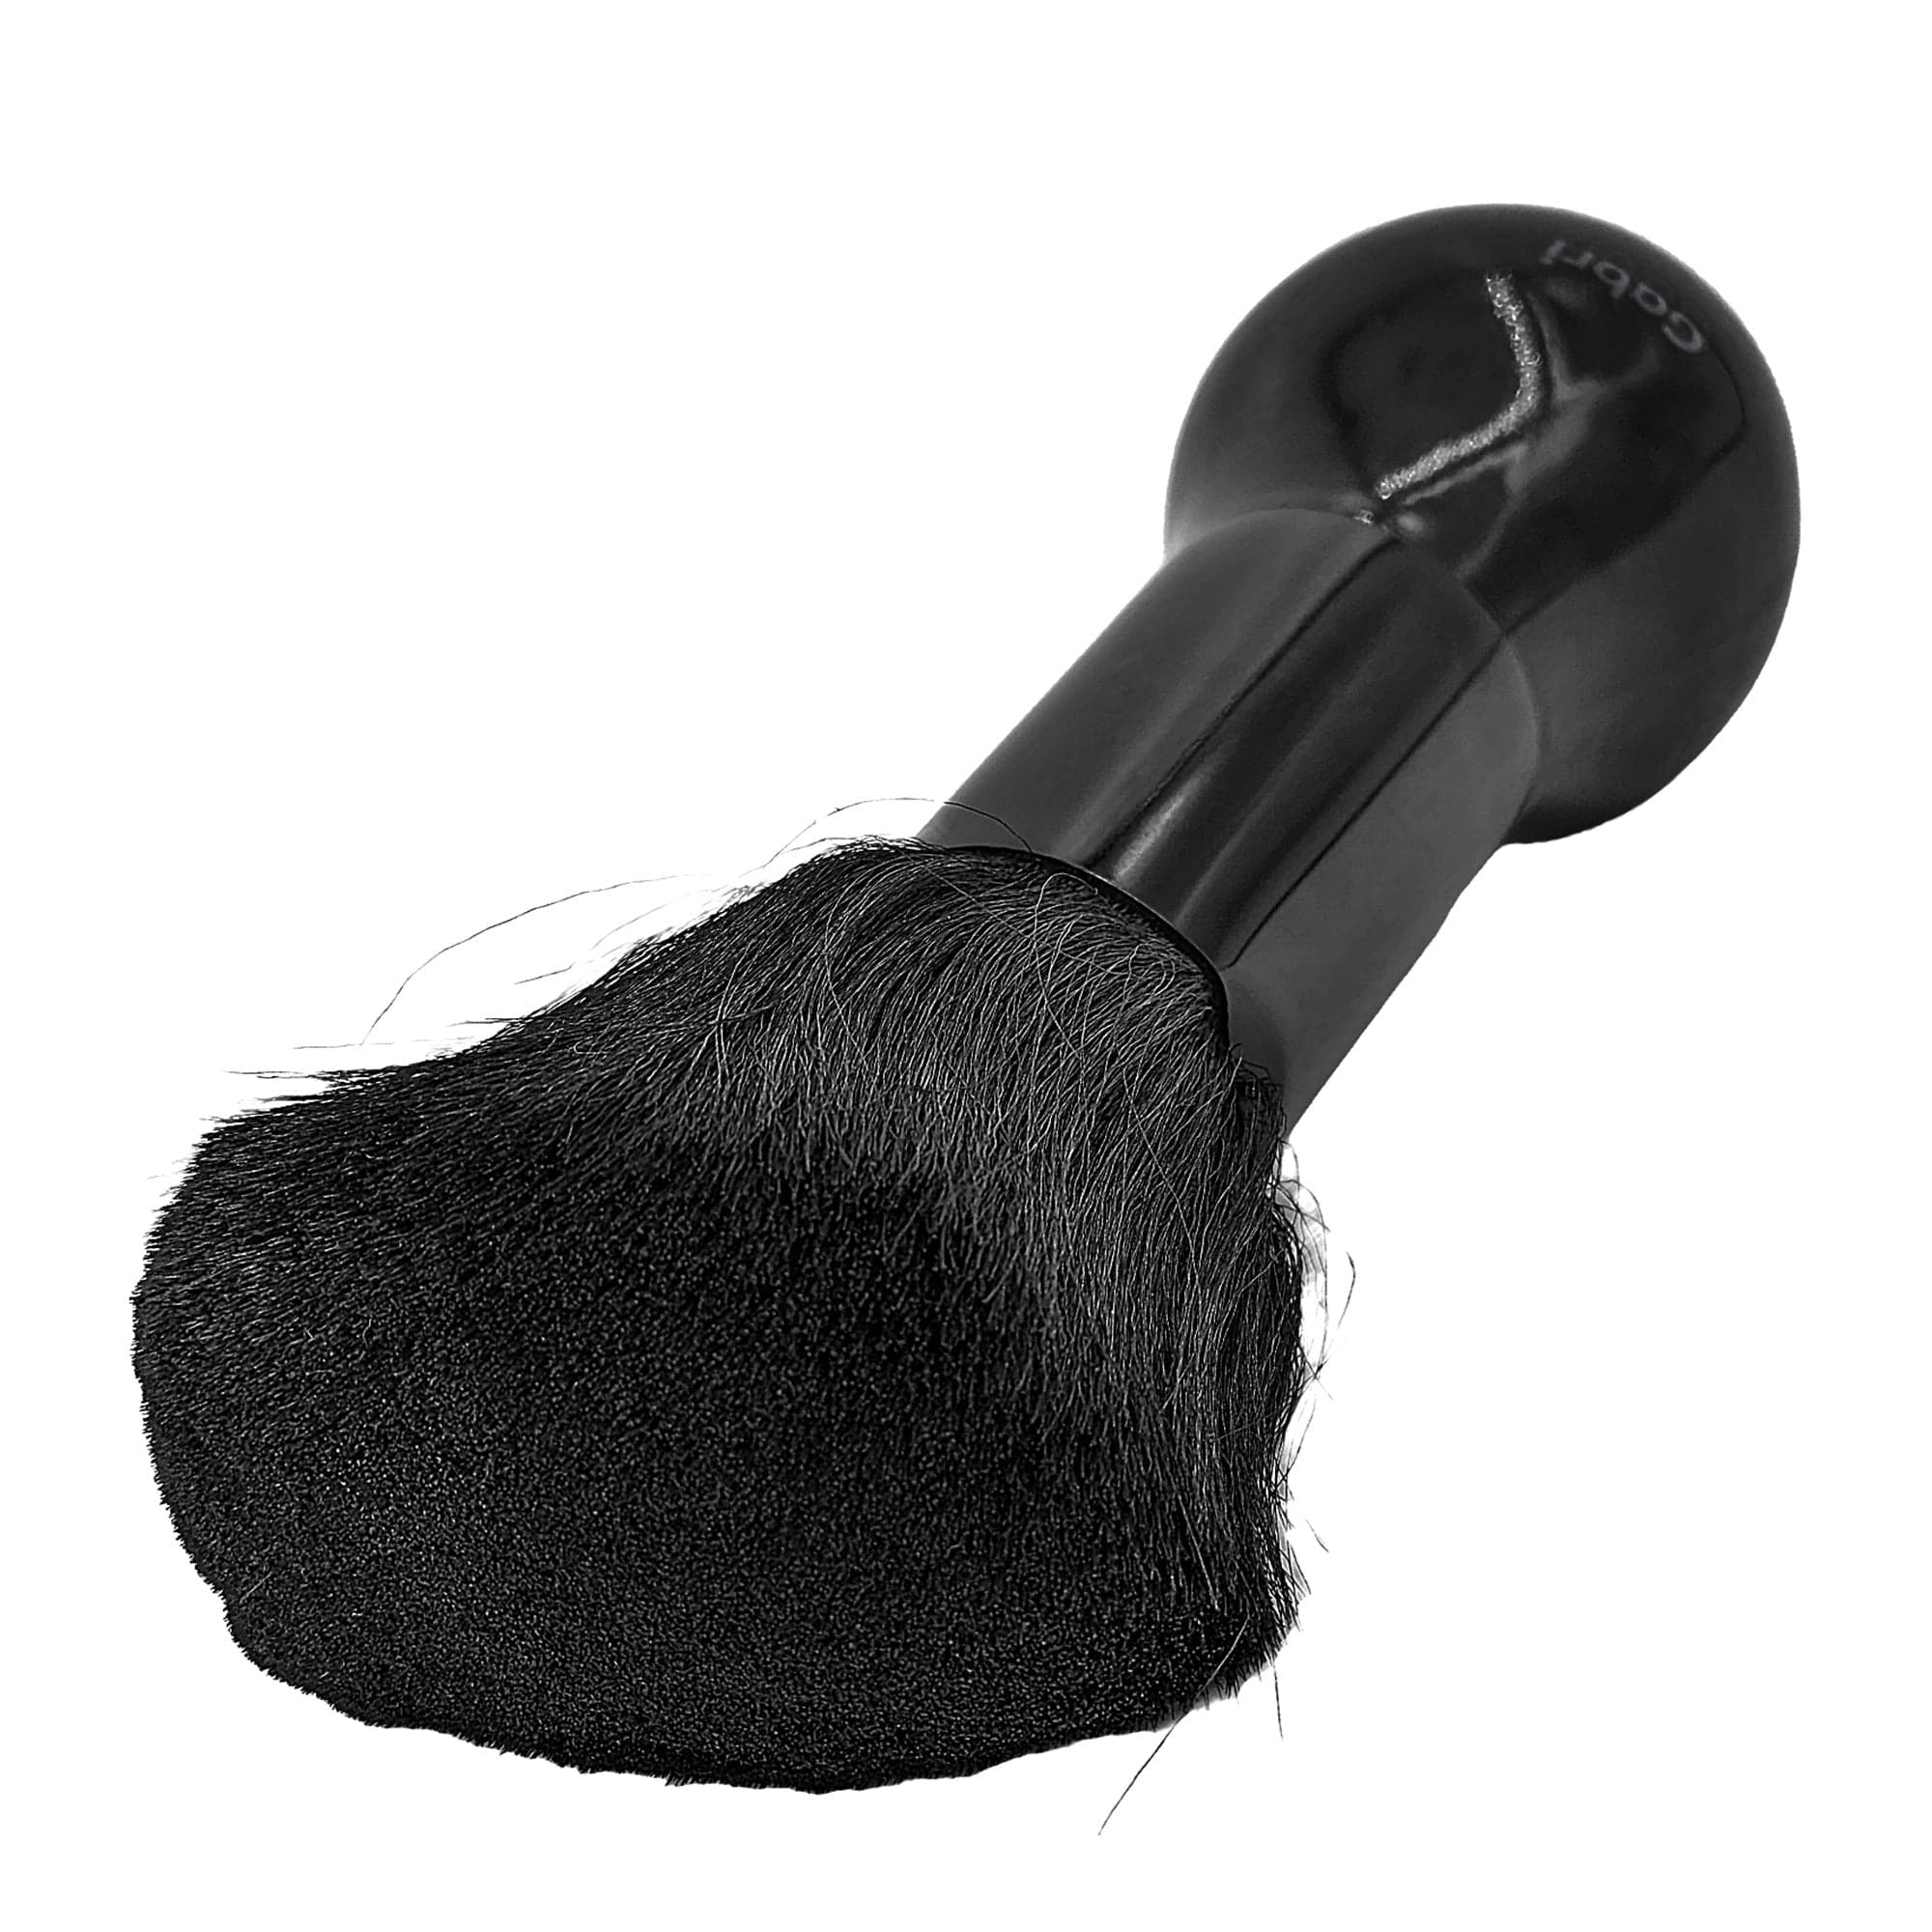 Gabri - Barber Neck Brush Metal Round Black Bristles 19cm